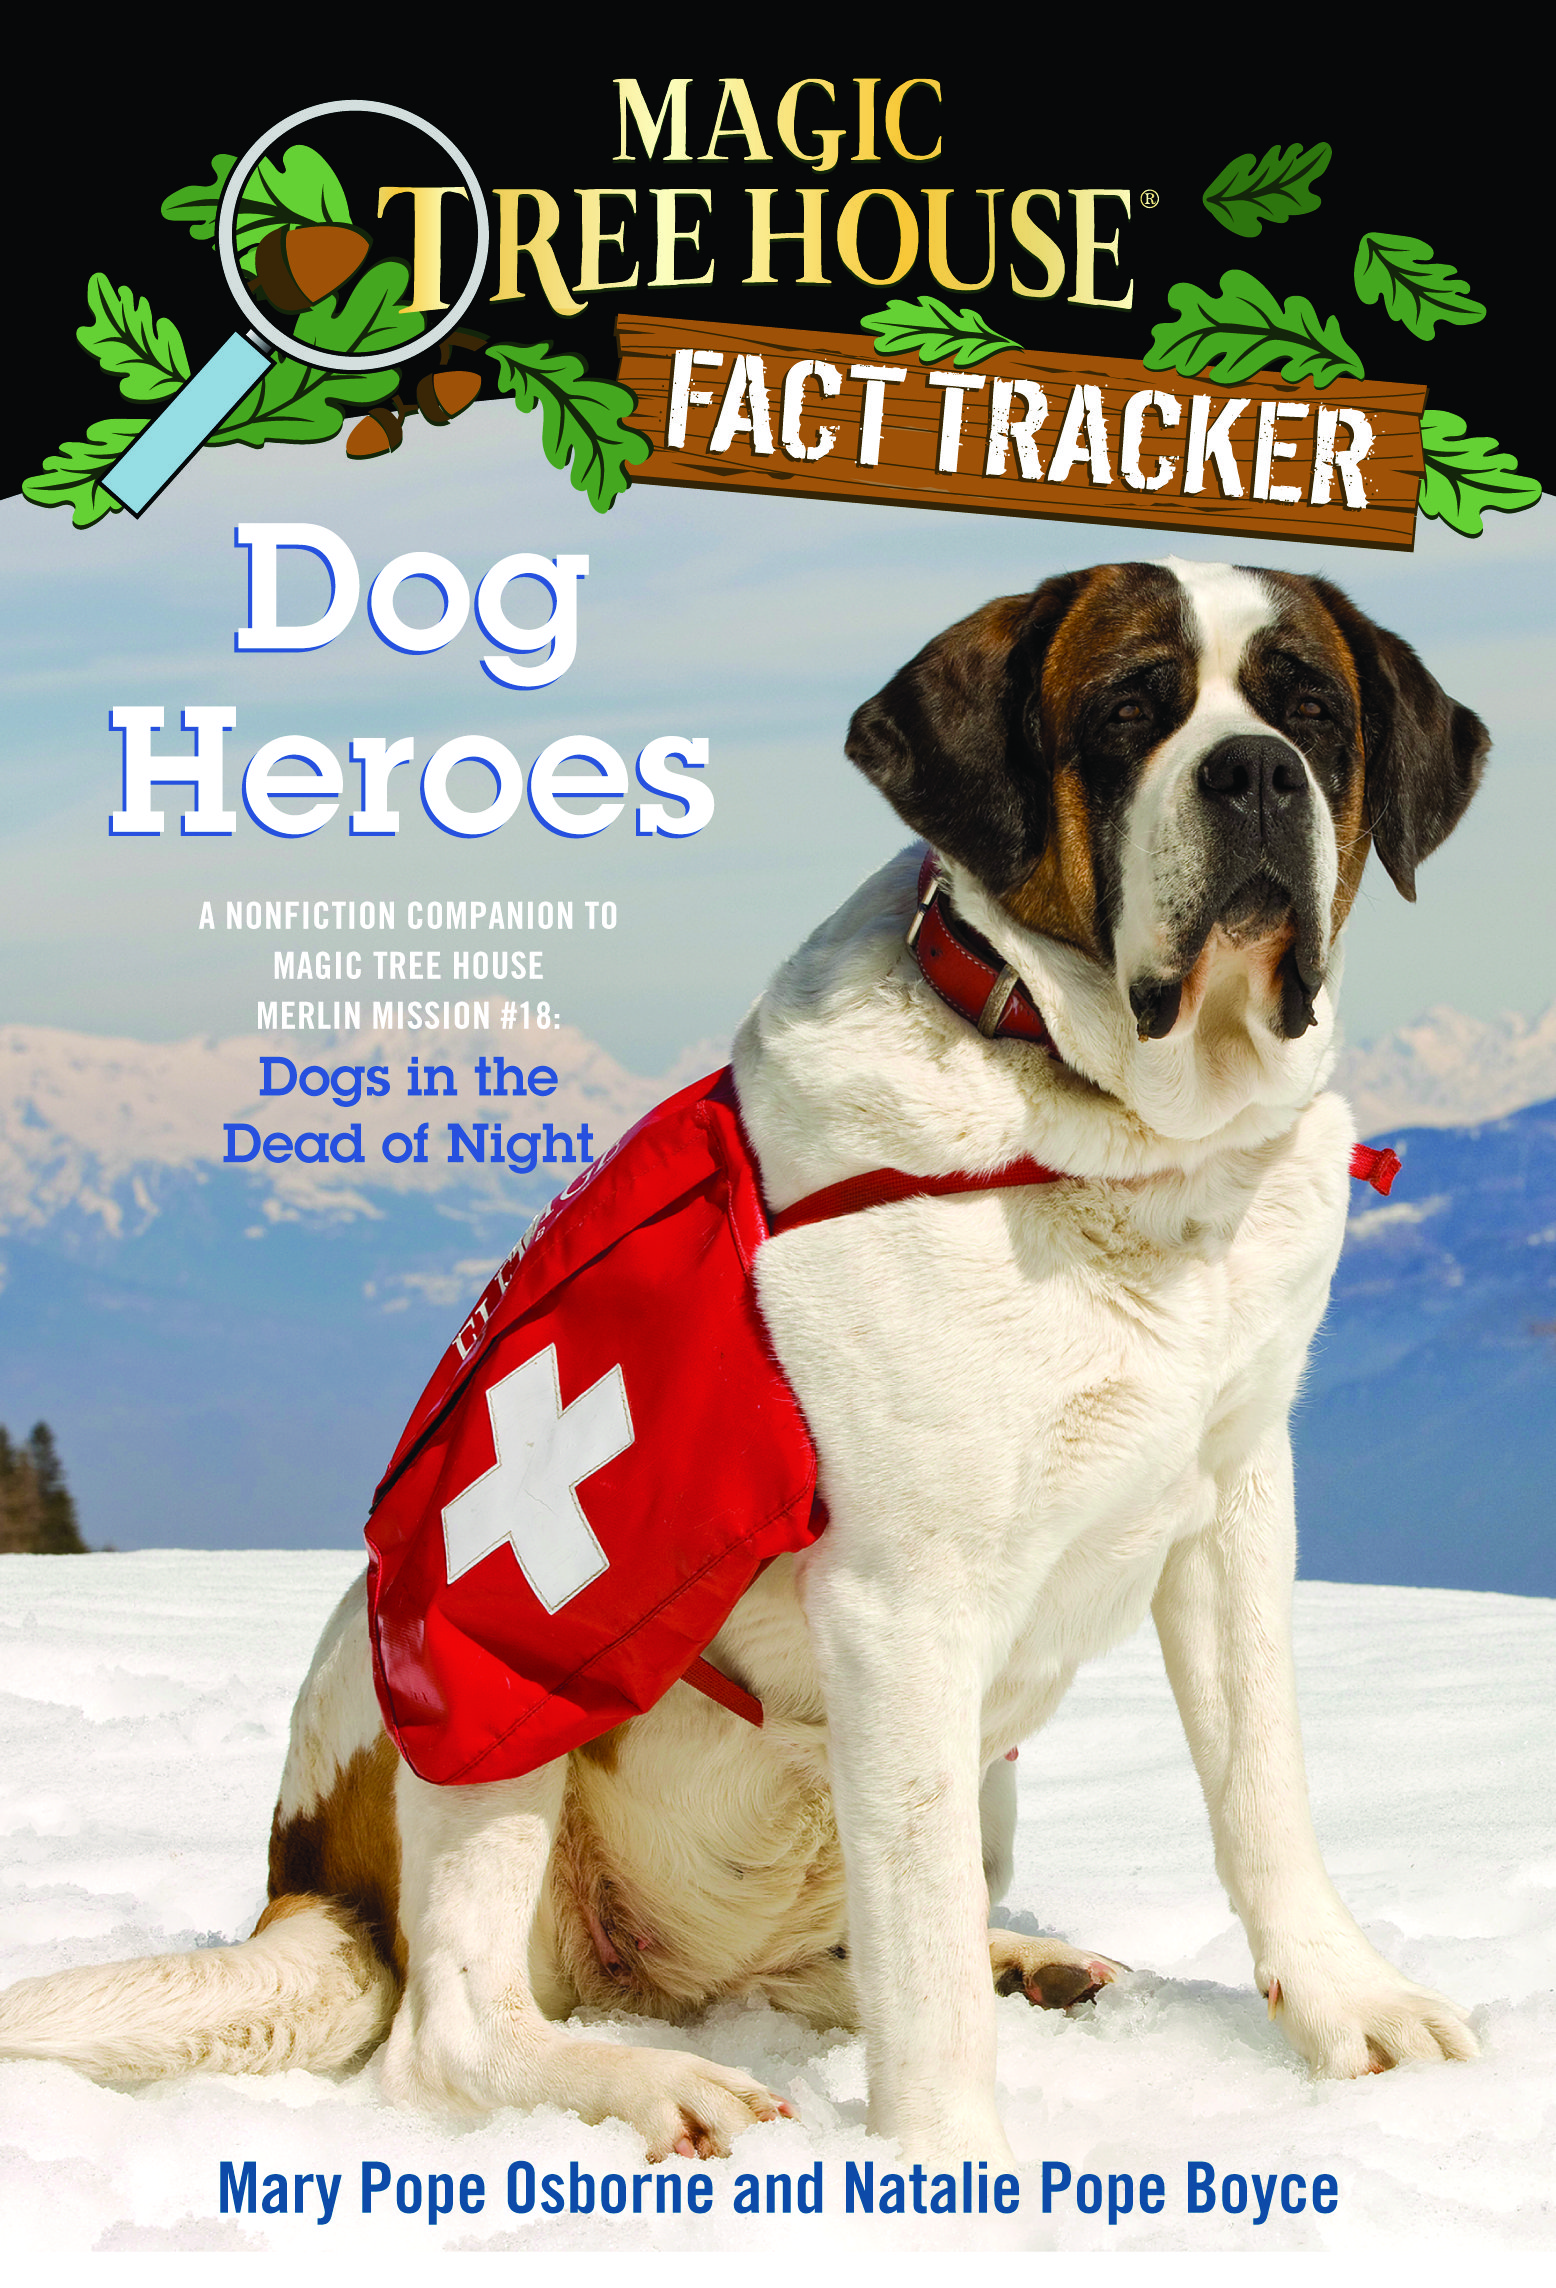 Magic Tree House Fact Tracker #24 Dog Heroes